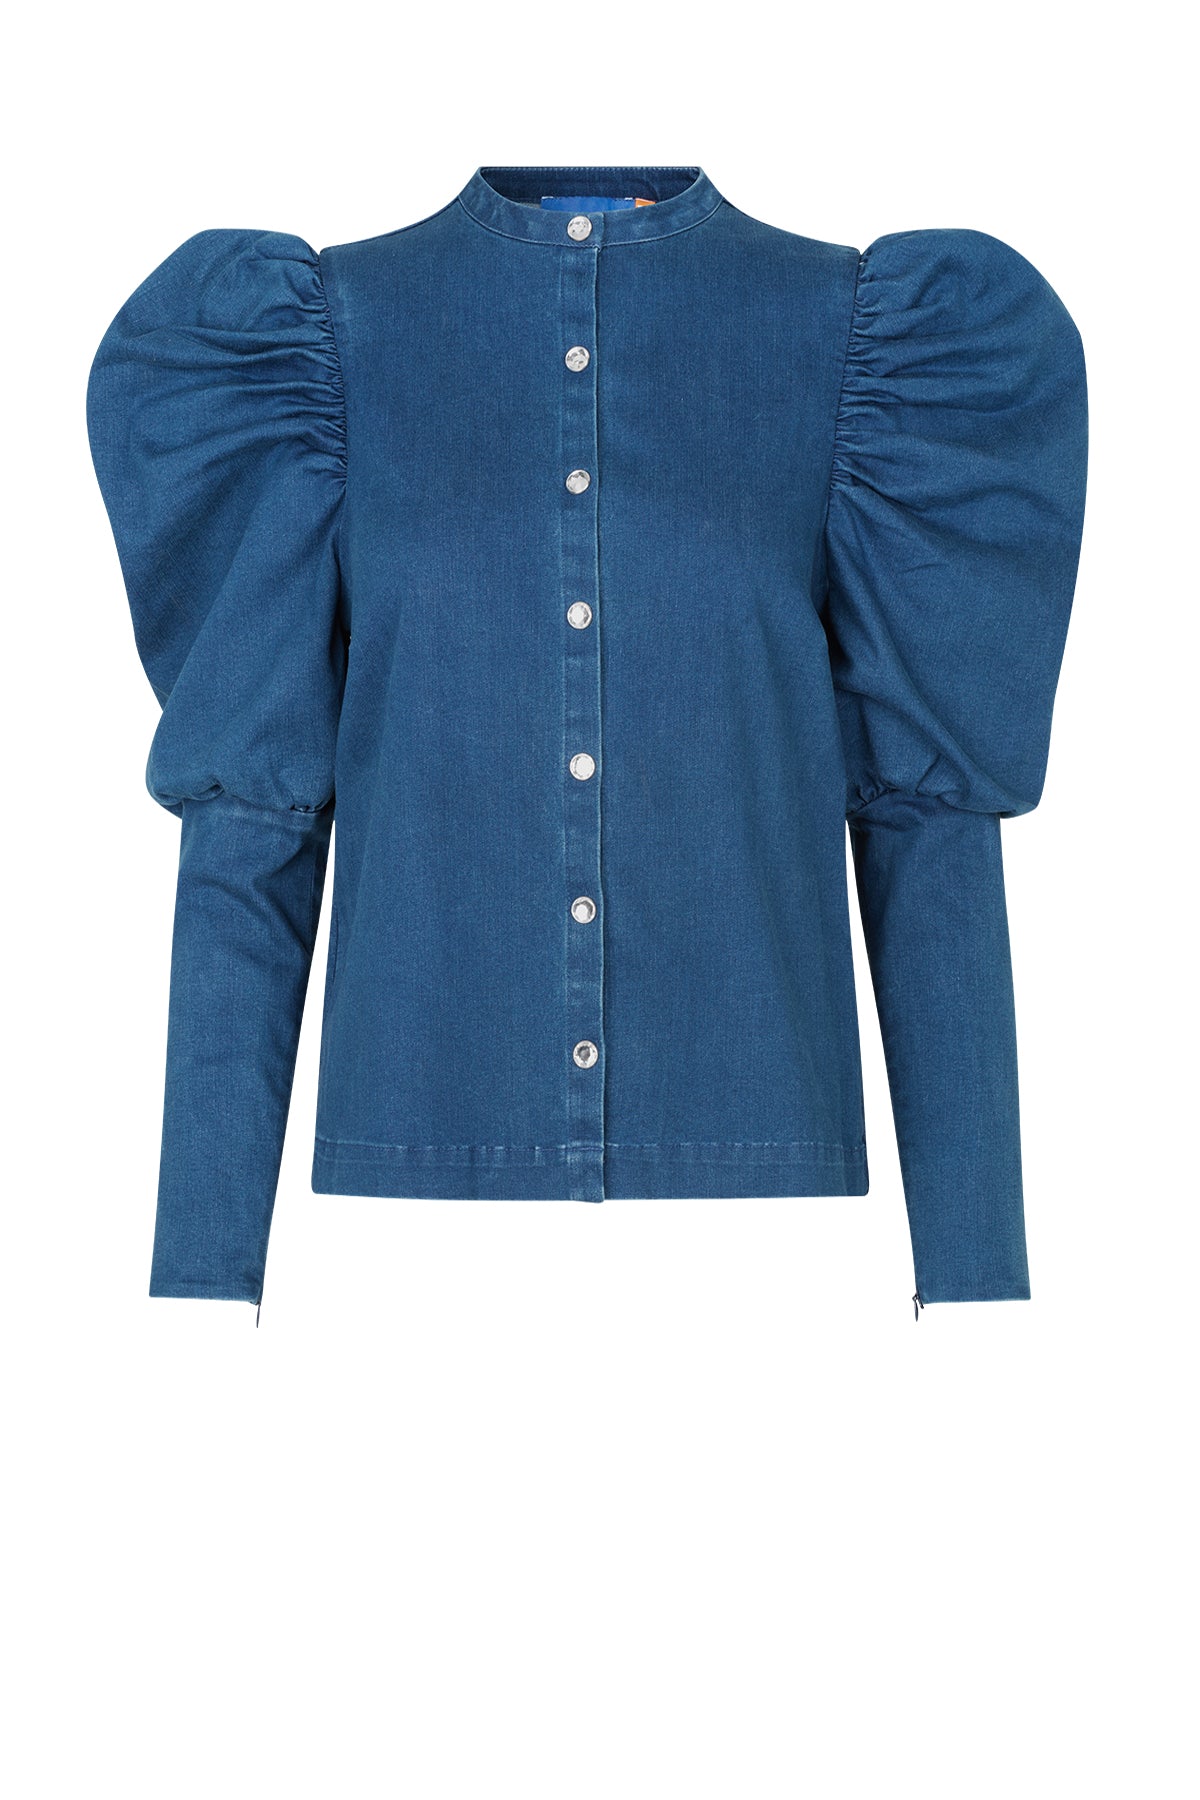 CRAS Molly Shirt Shirt Blue - Medival blue